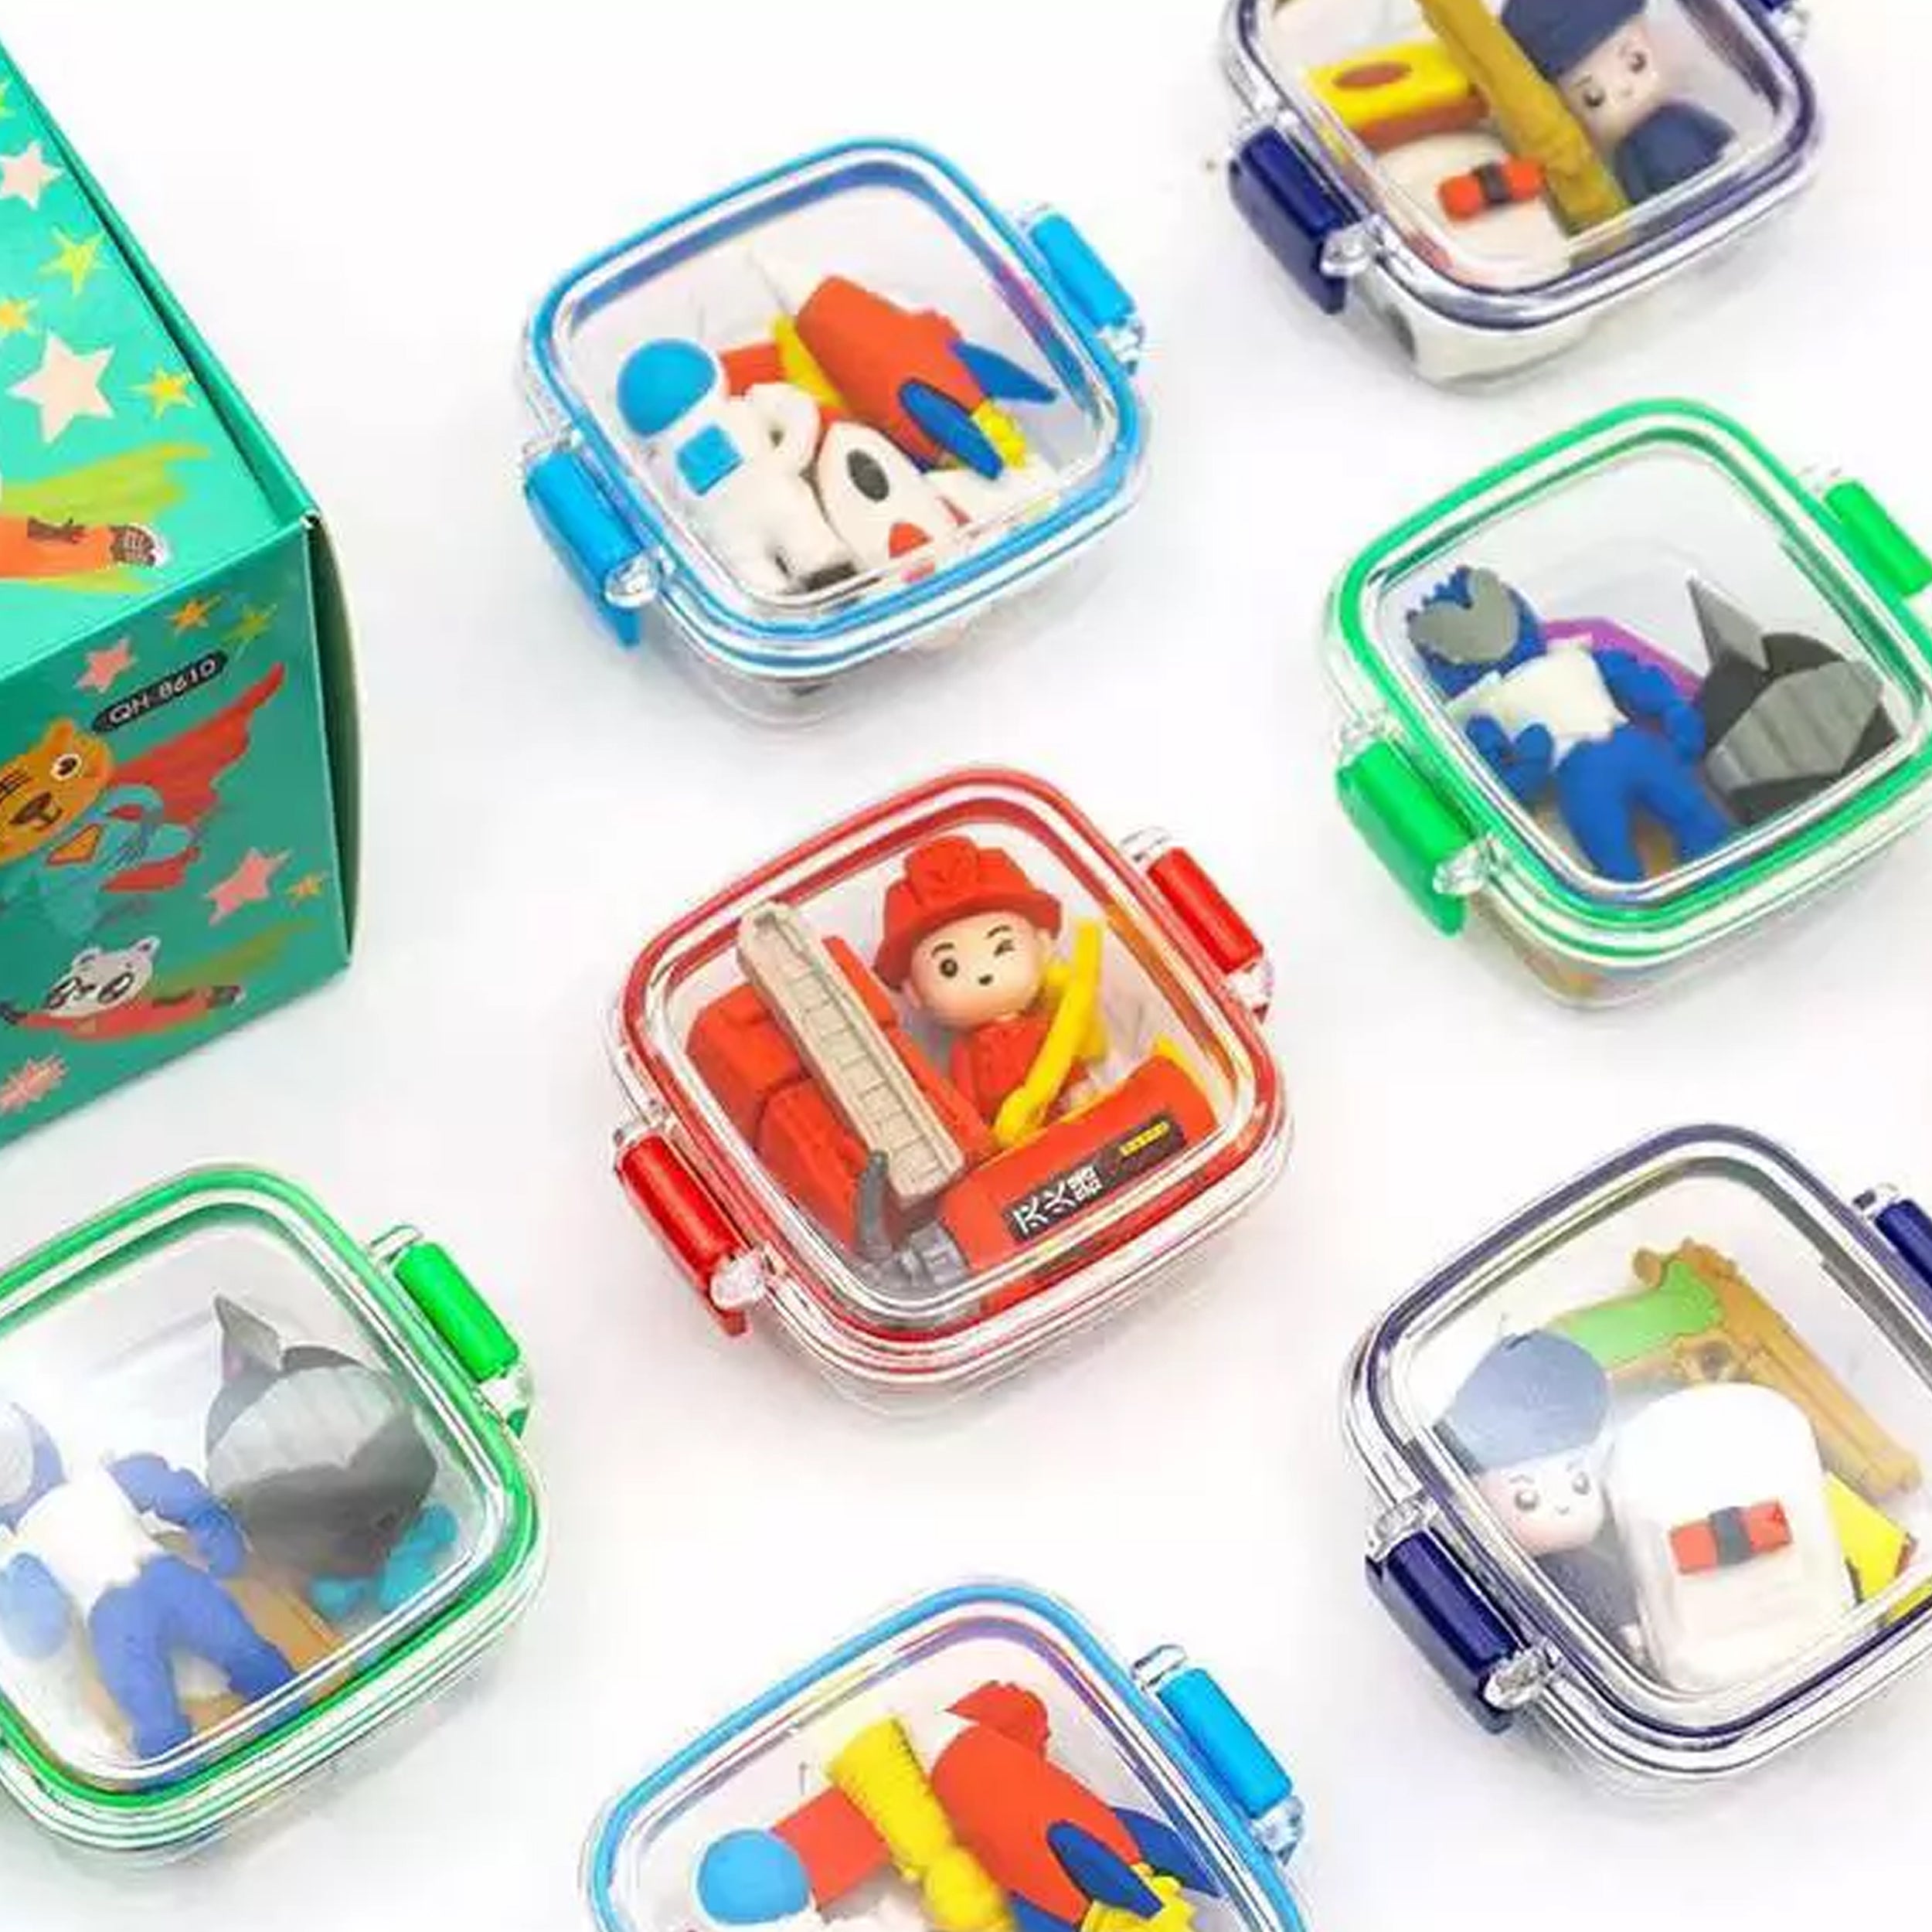 Explore Creativity with Astronaut Boxed Rubber Cartoon Eraser Set